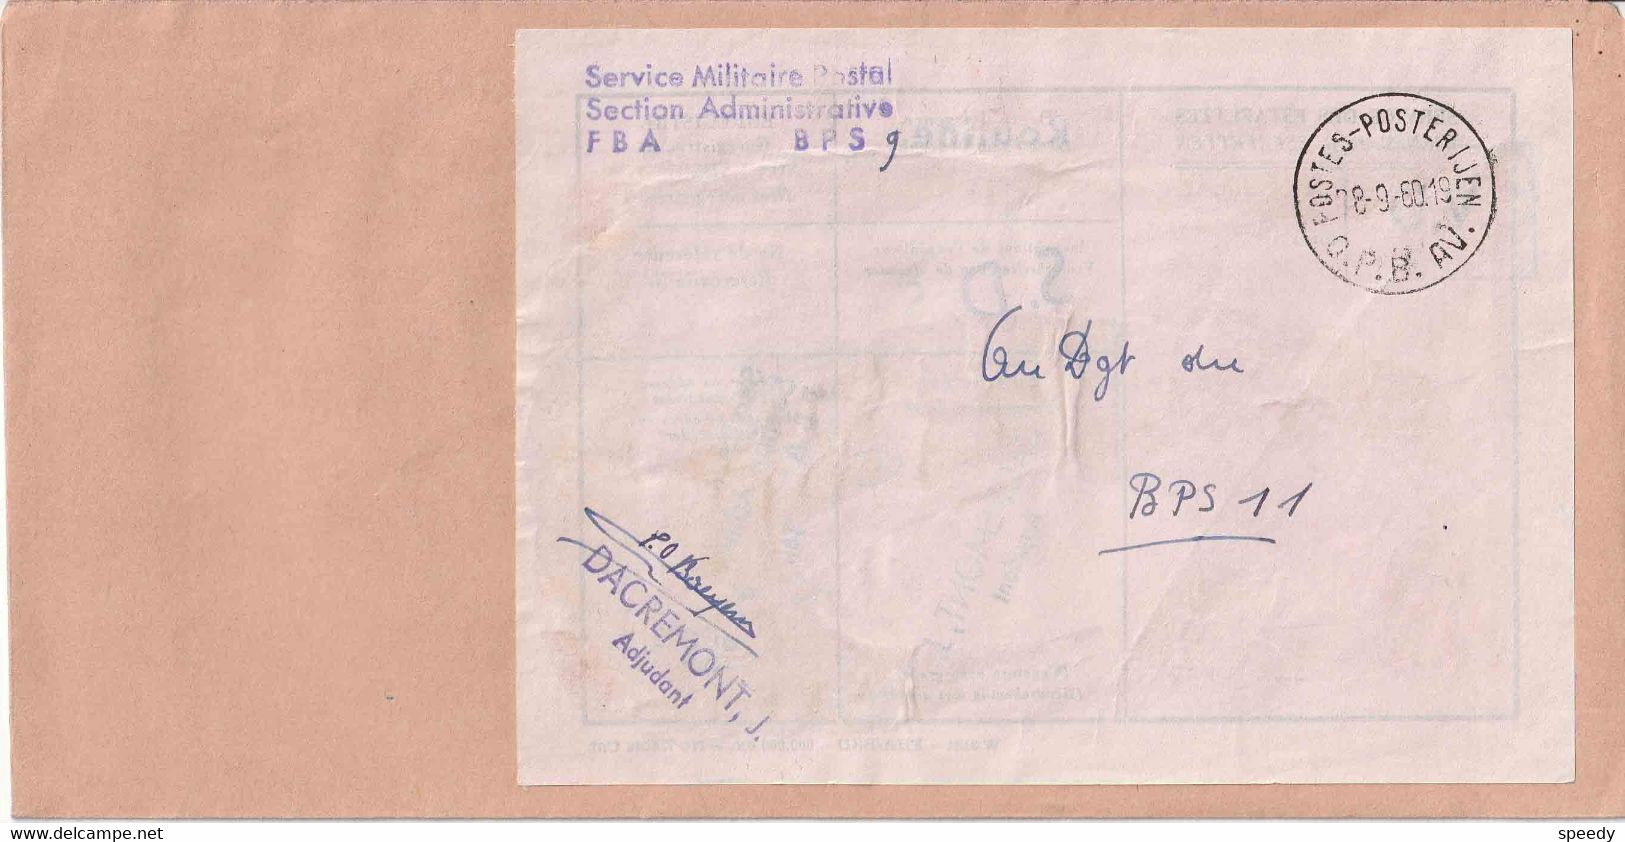 Bf  "SERVIVE MILITAIRE POSTAL / BPS 9"  Naar Dgt BPS 11 " POSTES - POSTERIJEN /28.9.60 /  O. P. B. AV."  (RRR) - Army